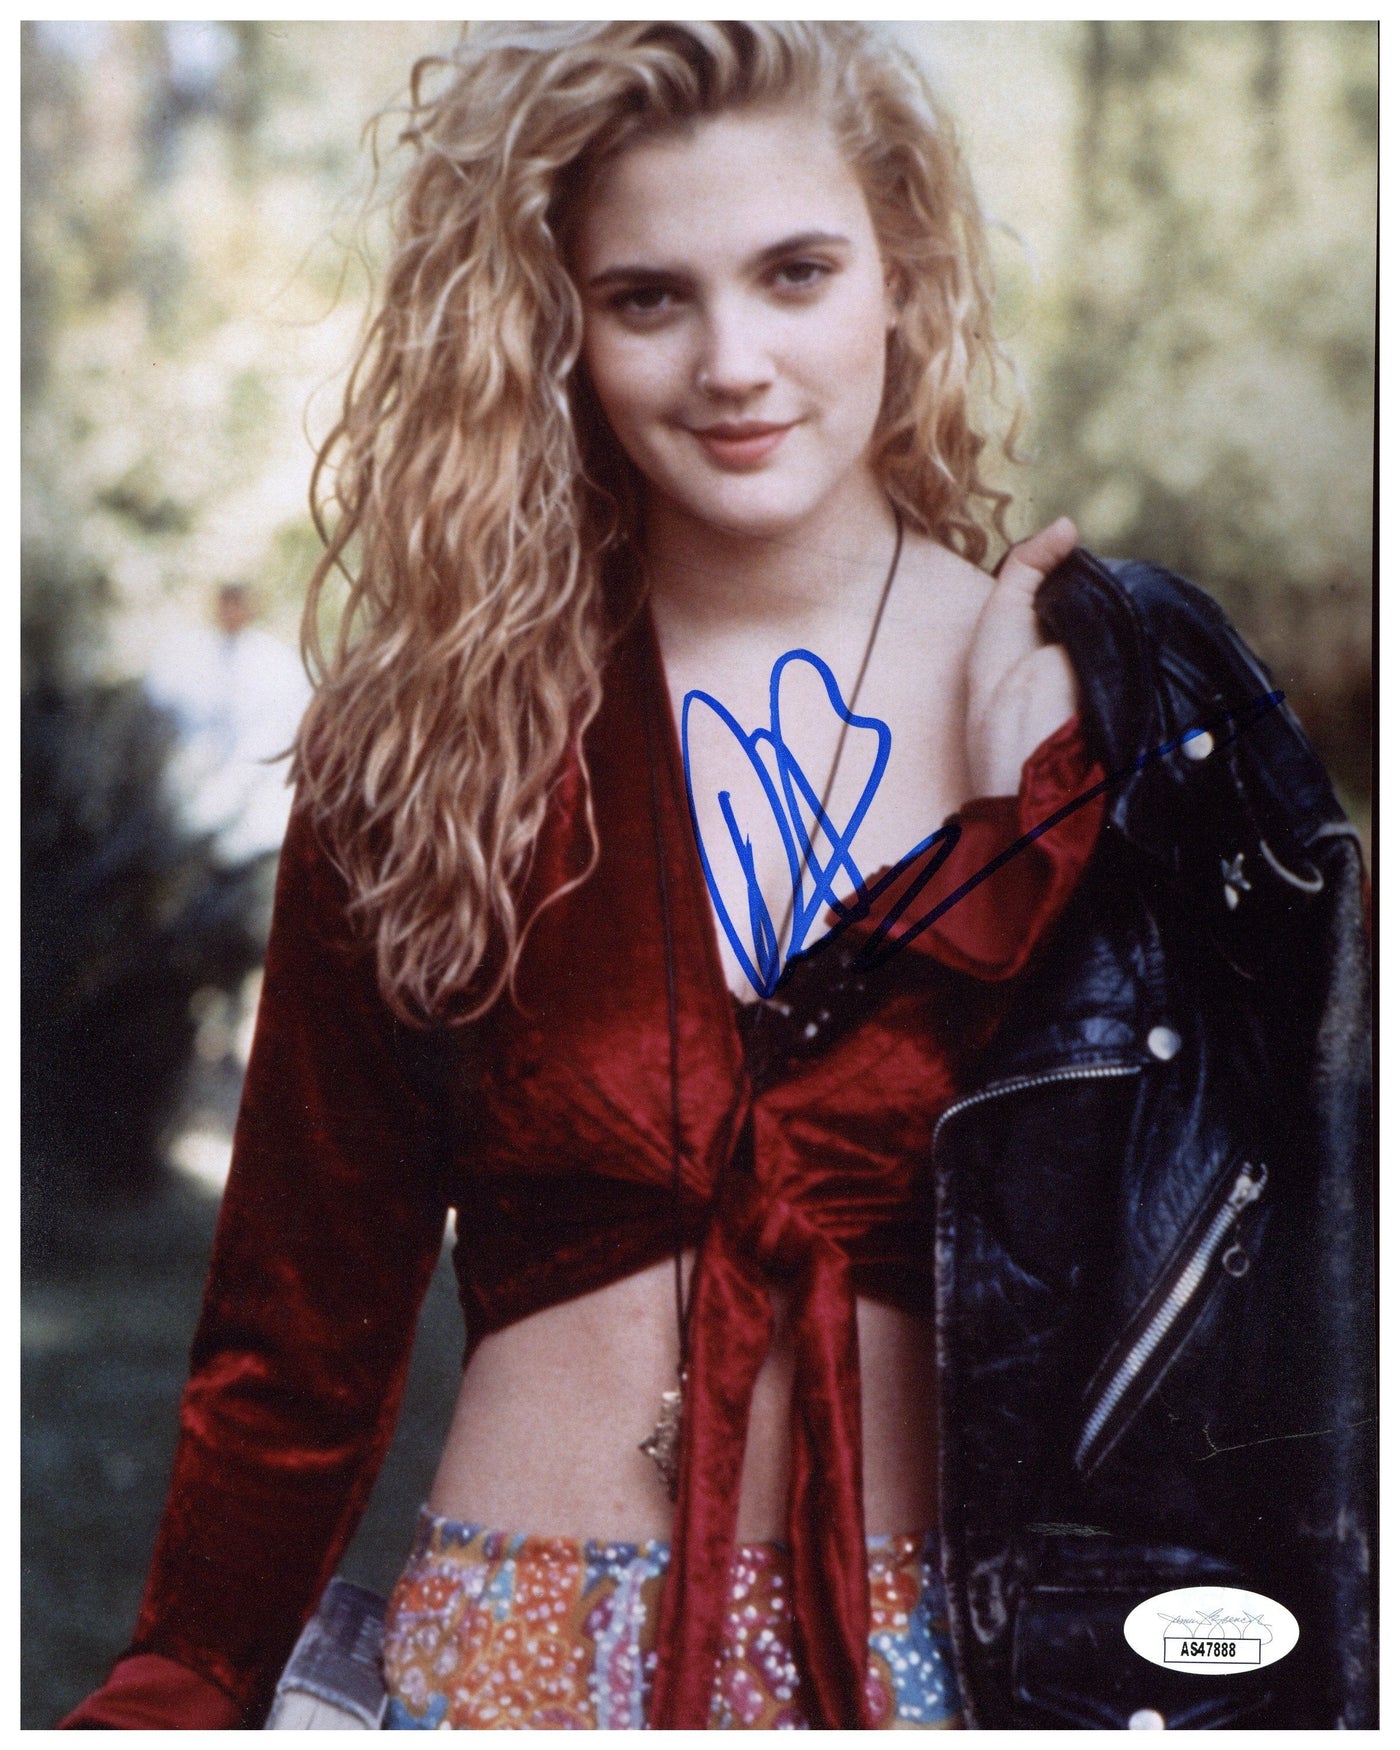 Drew Barrymore Signed 8x10 Photo Poison Ivy Autographed JSA COA19